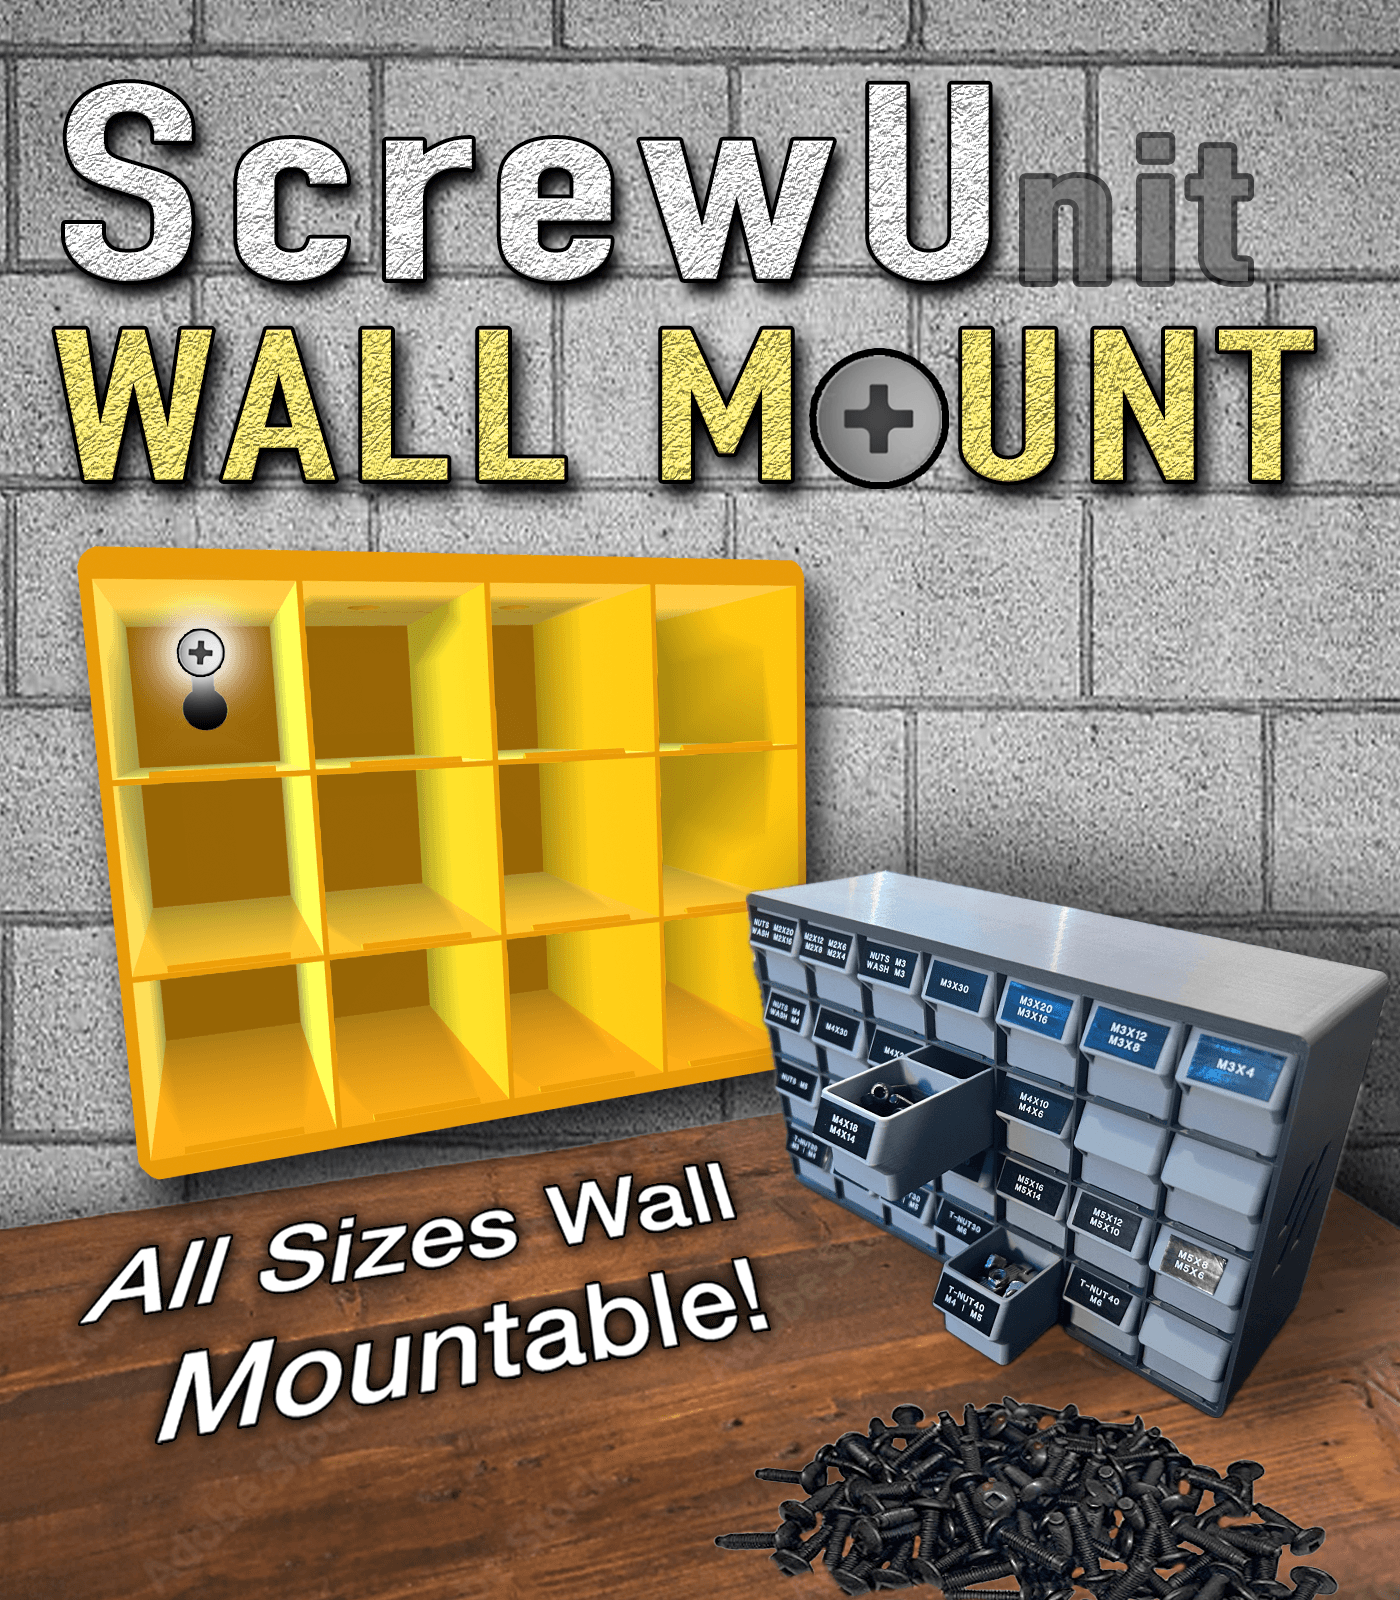 ScrewU-nit Wall Mountable - 4 Sizes 3d model